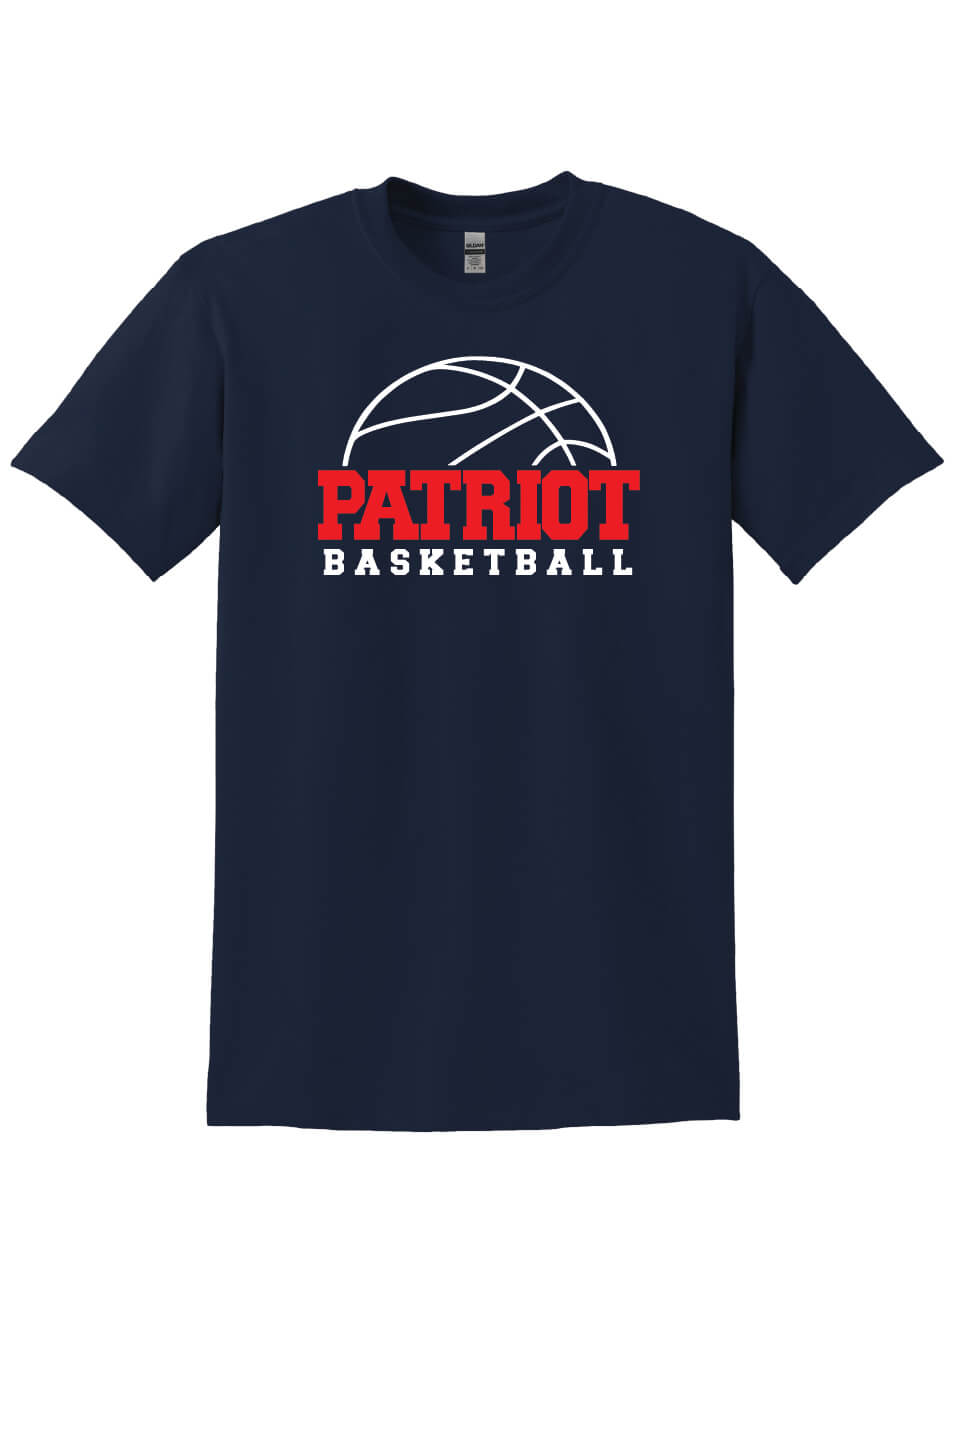 Patriot Basketball Short Sleeve T-Shirt (Youth) navy